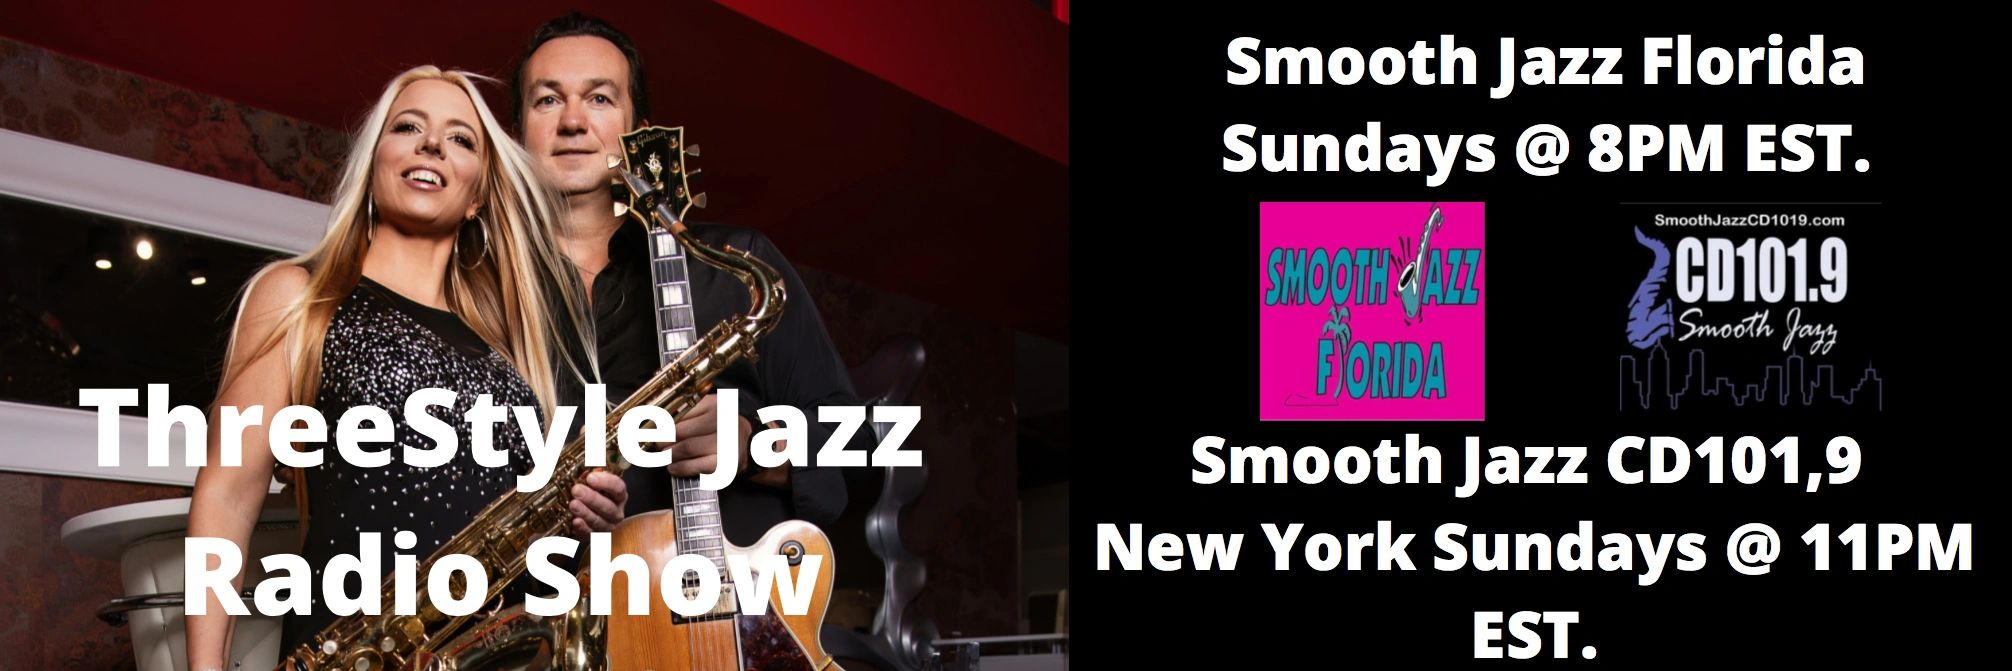 Smooth Jazz CD 101.9 New York - Home